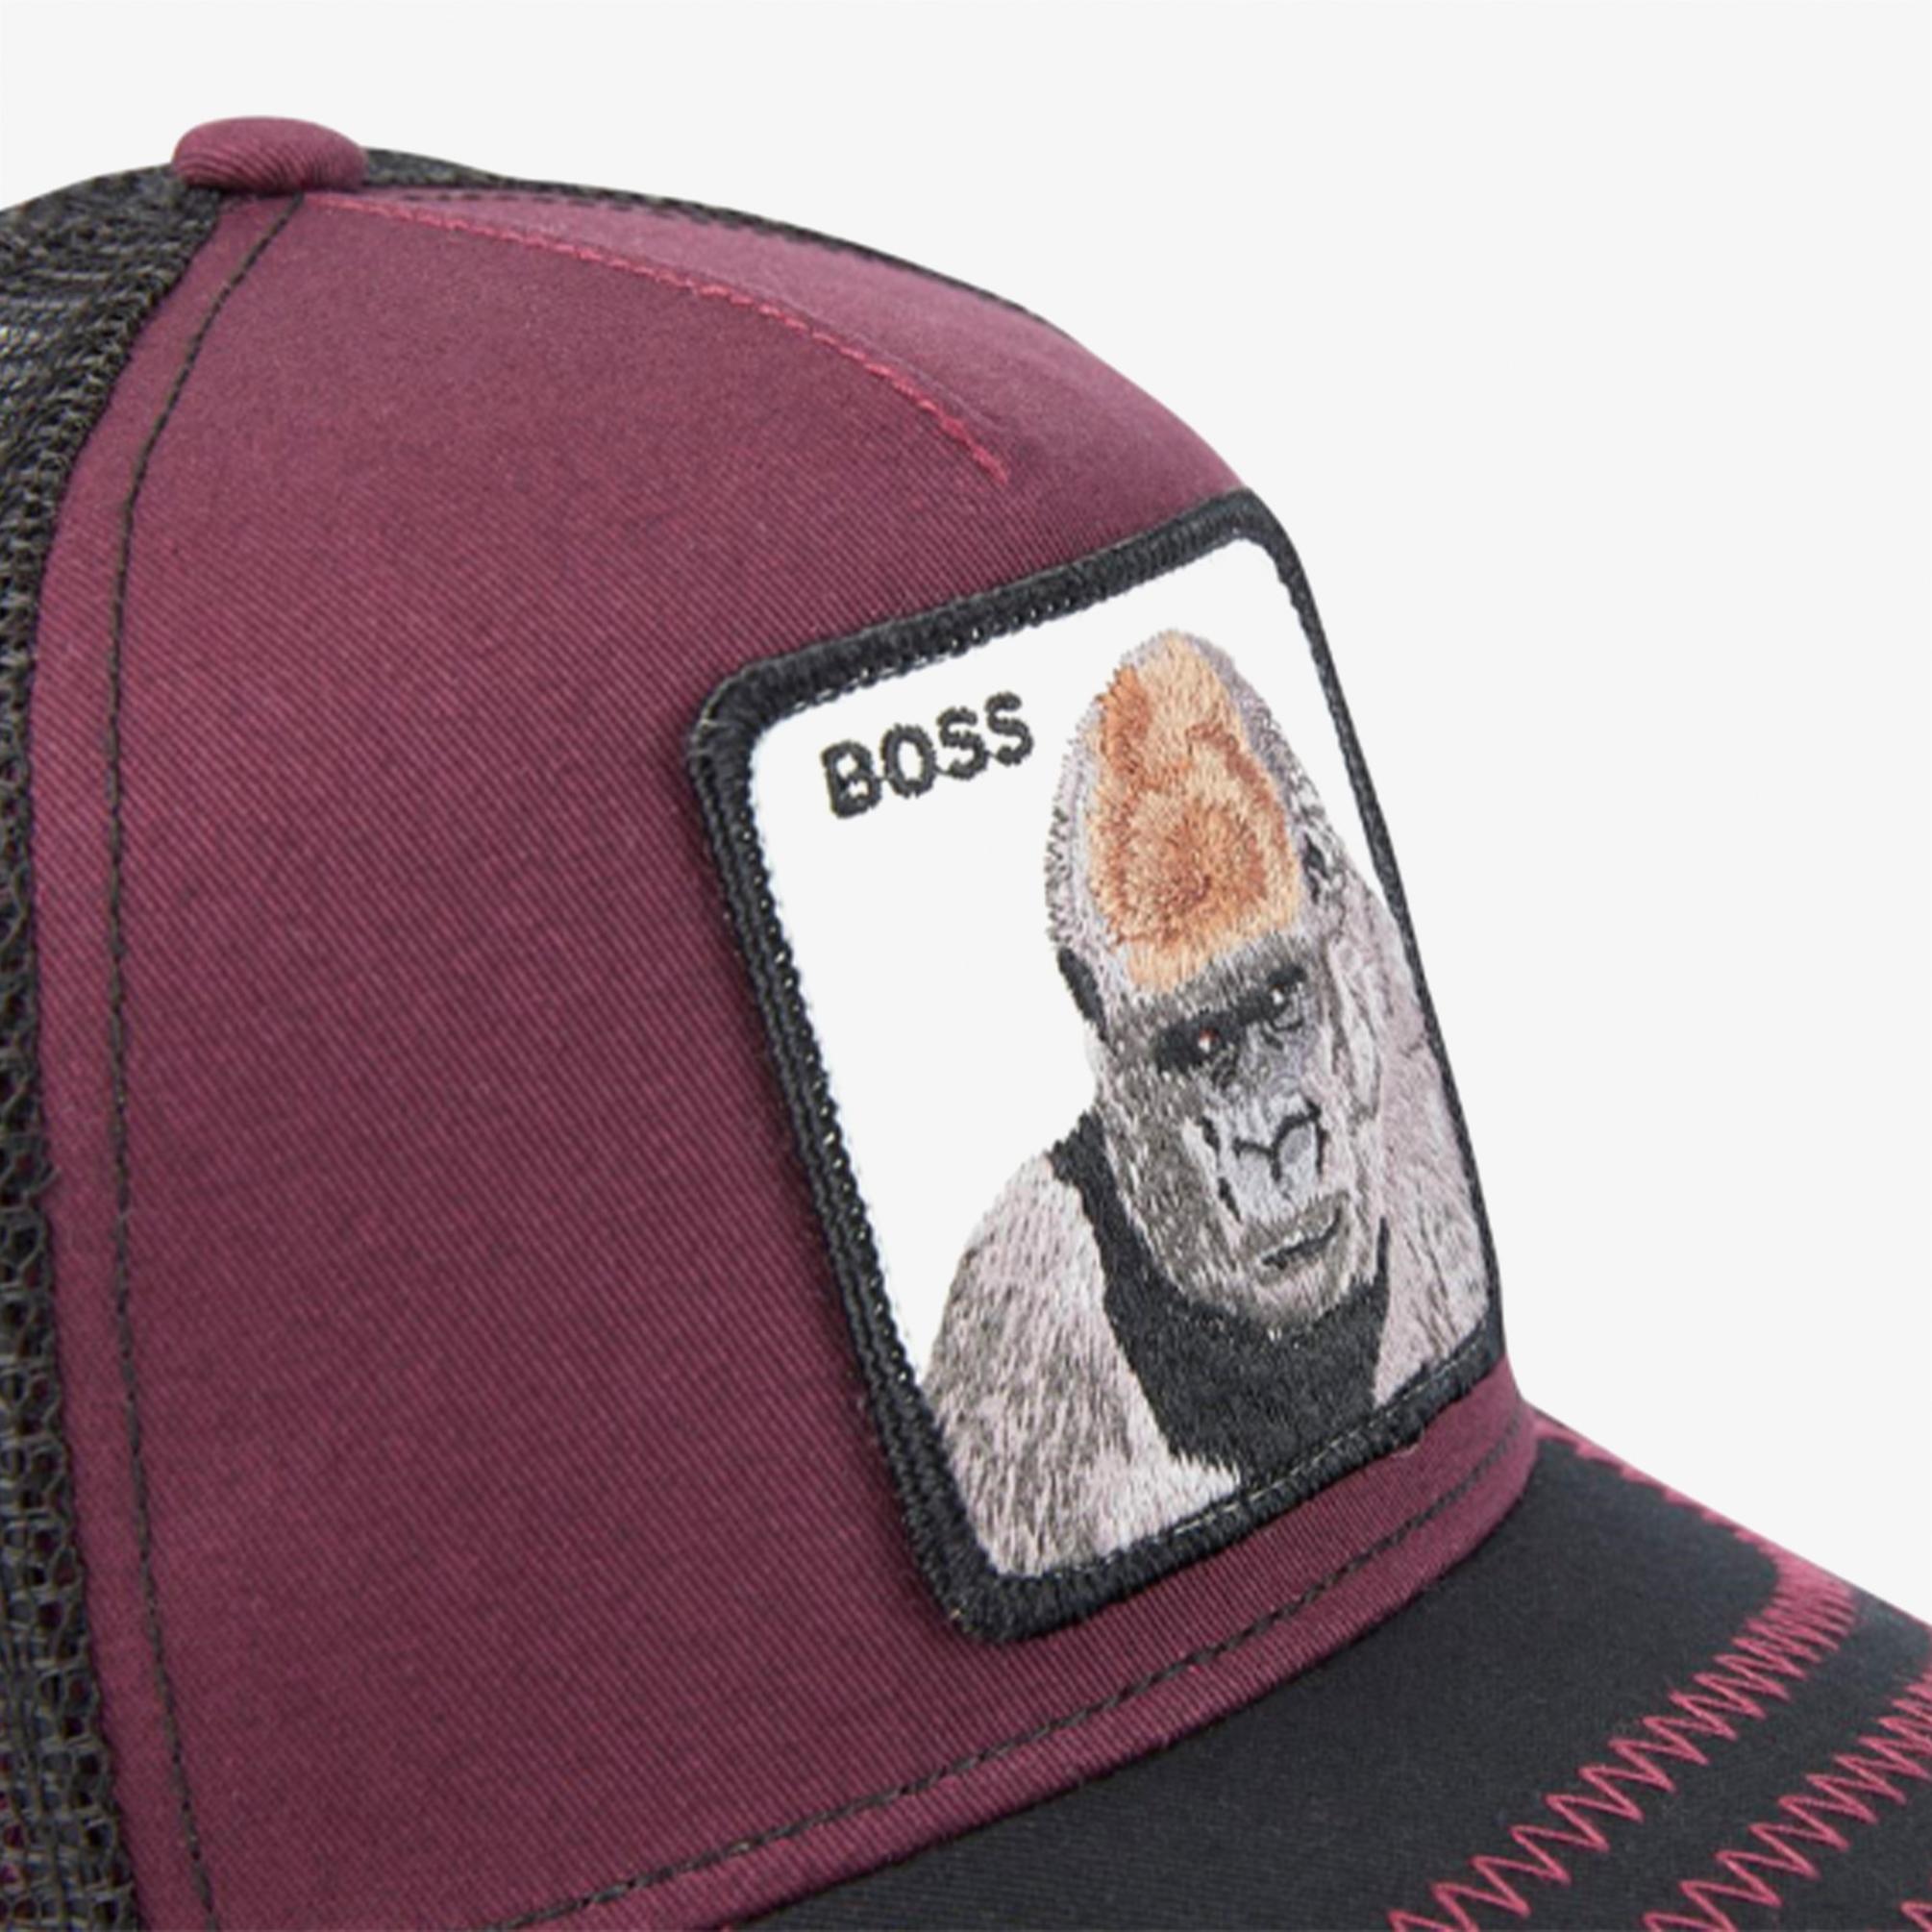  Goorin Bros The Boss Unisex Bordo  Şapka